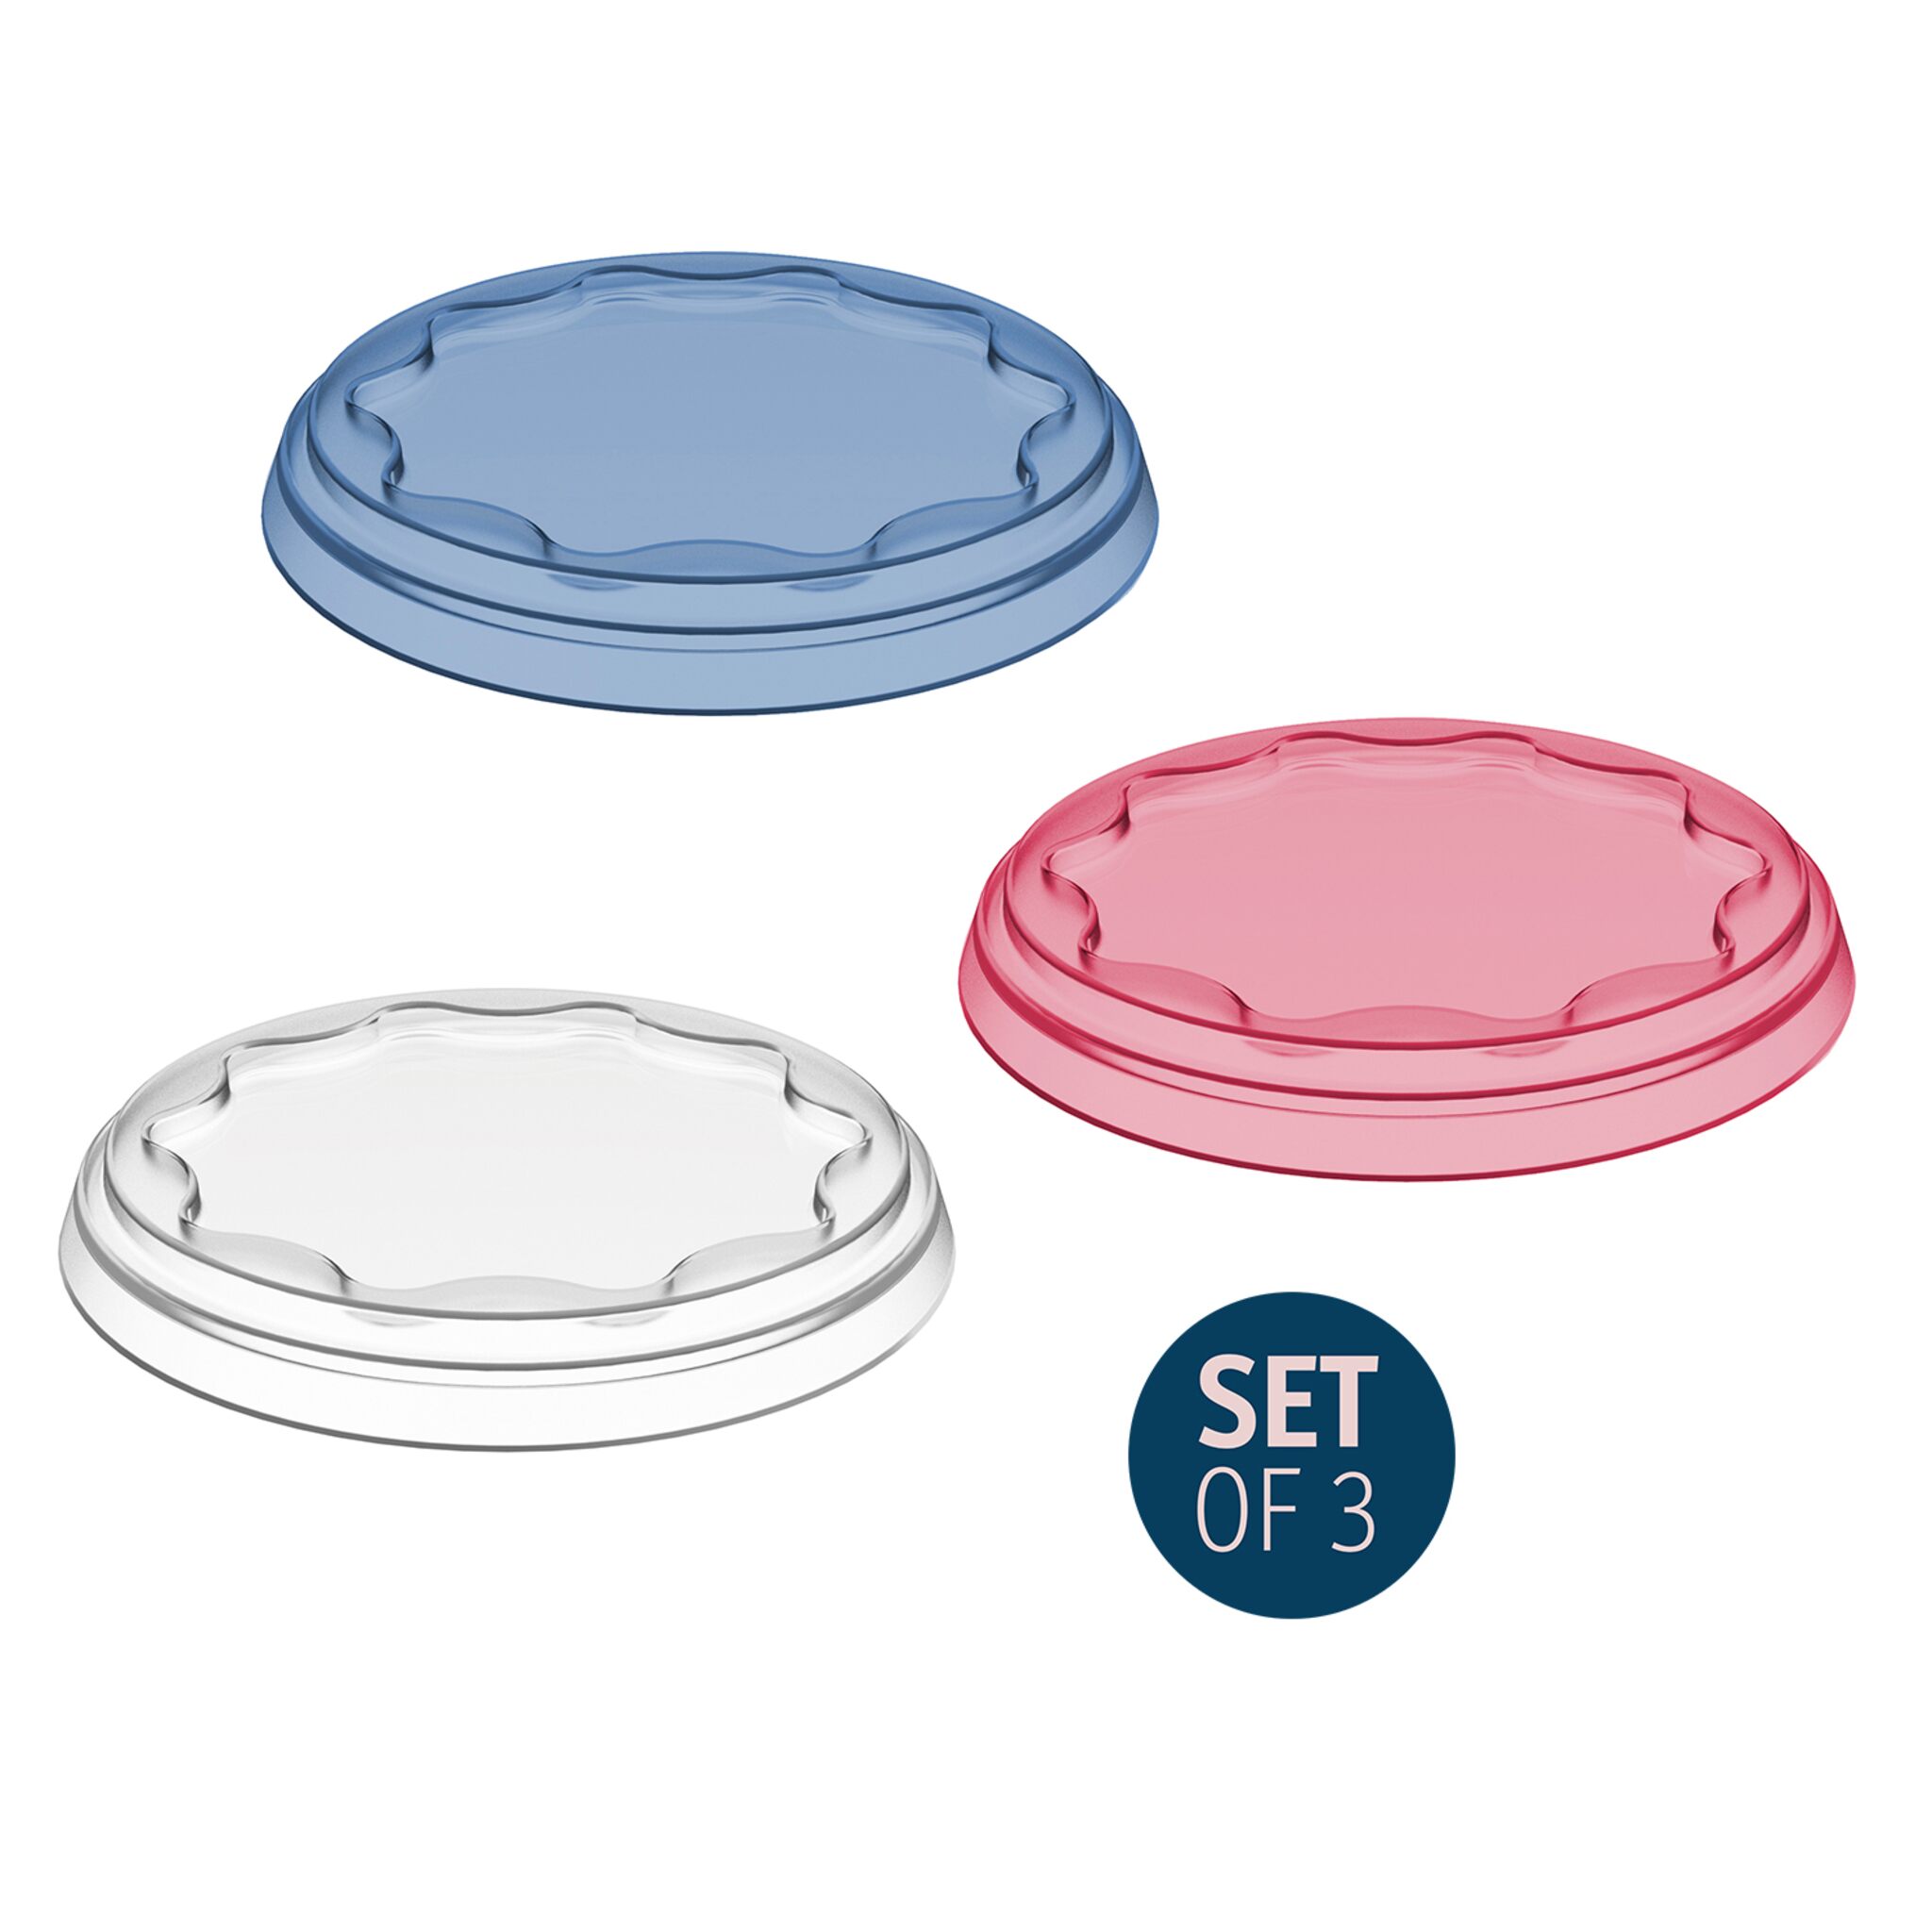 koziol set of 3 freshness lids FRESH, freshness lids for yogurt and other packaging.